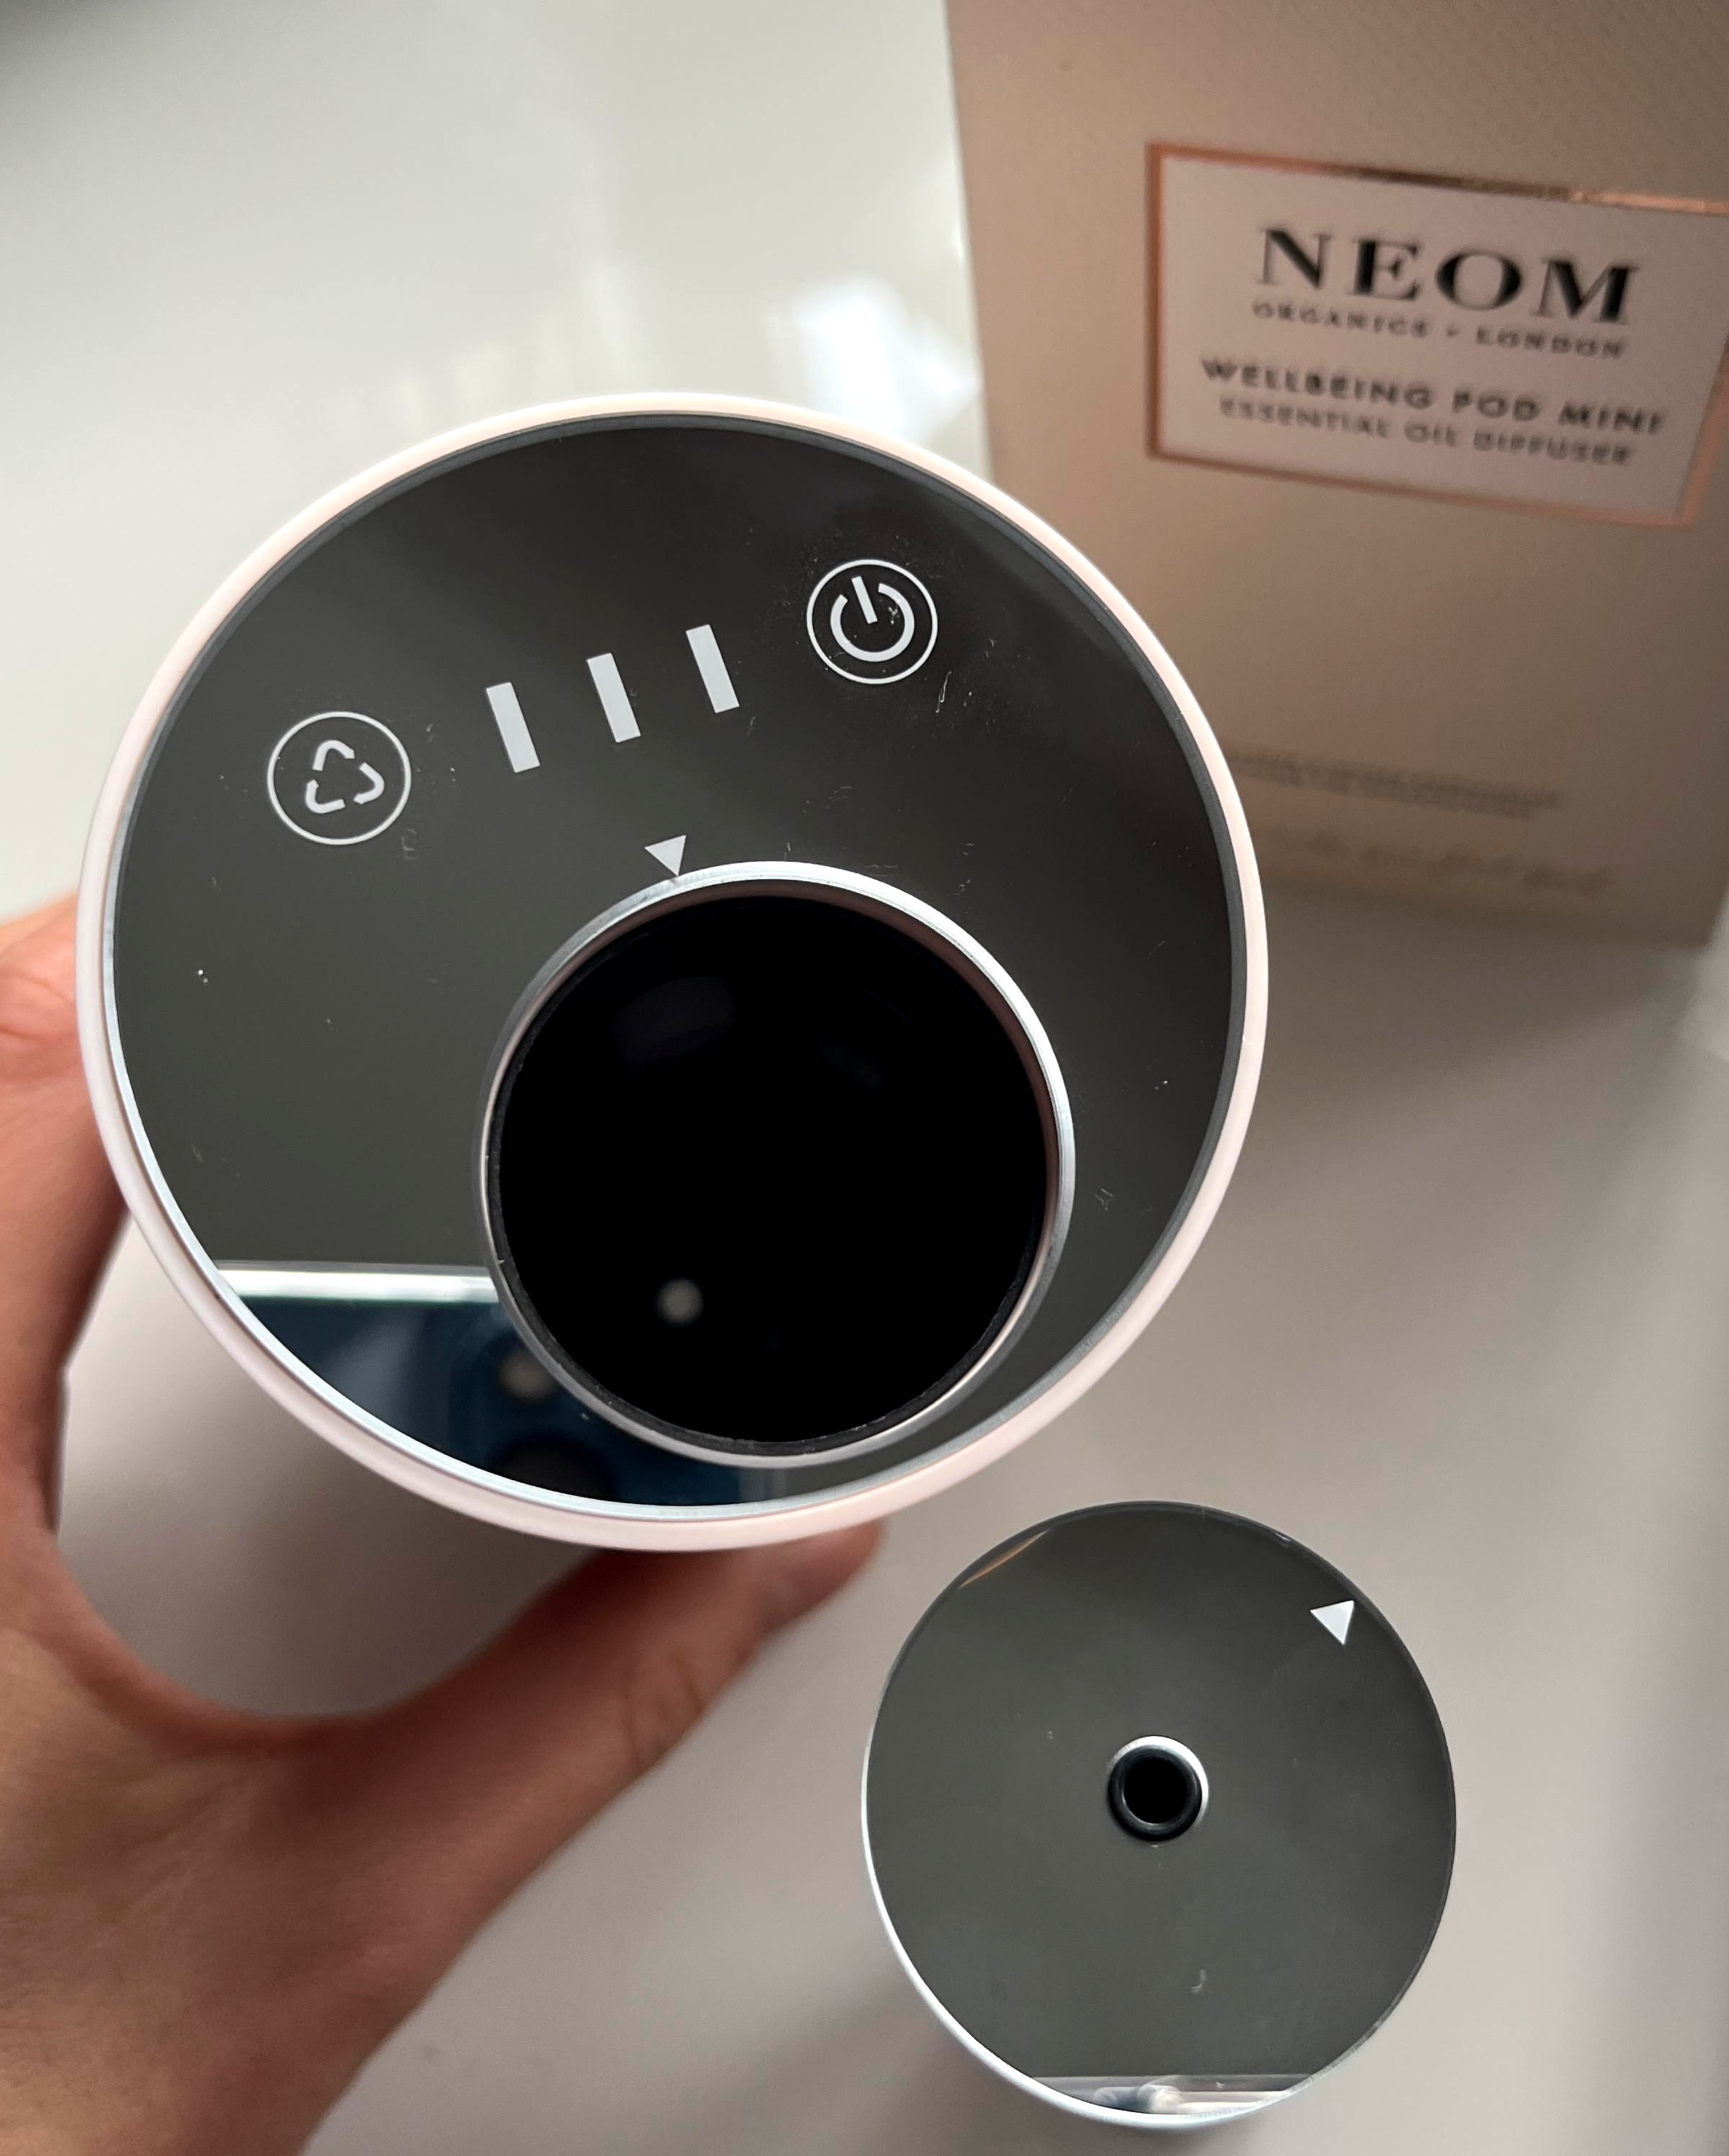 Neom Essential Oil Diffuser | Wellbeing Pod Mini | Black